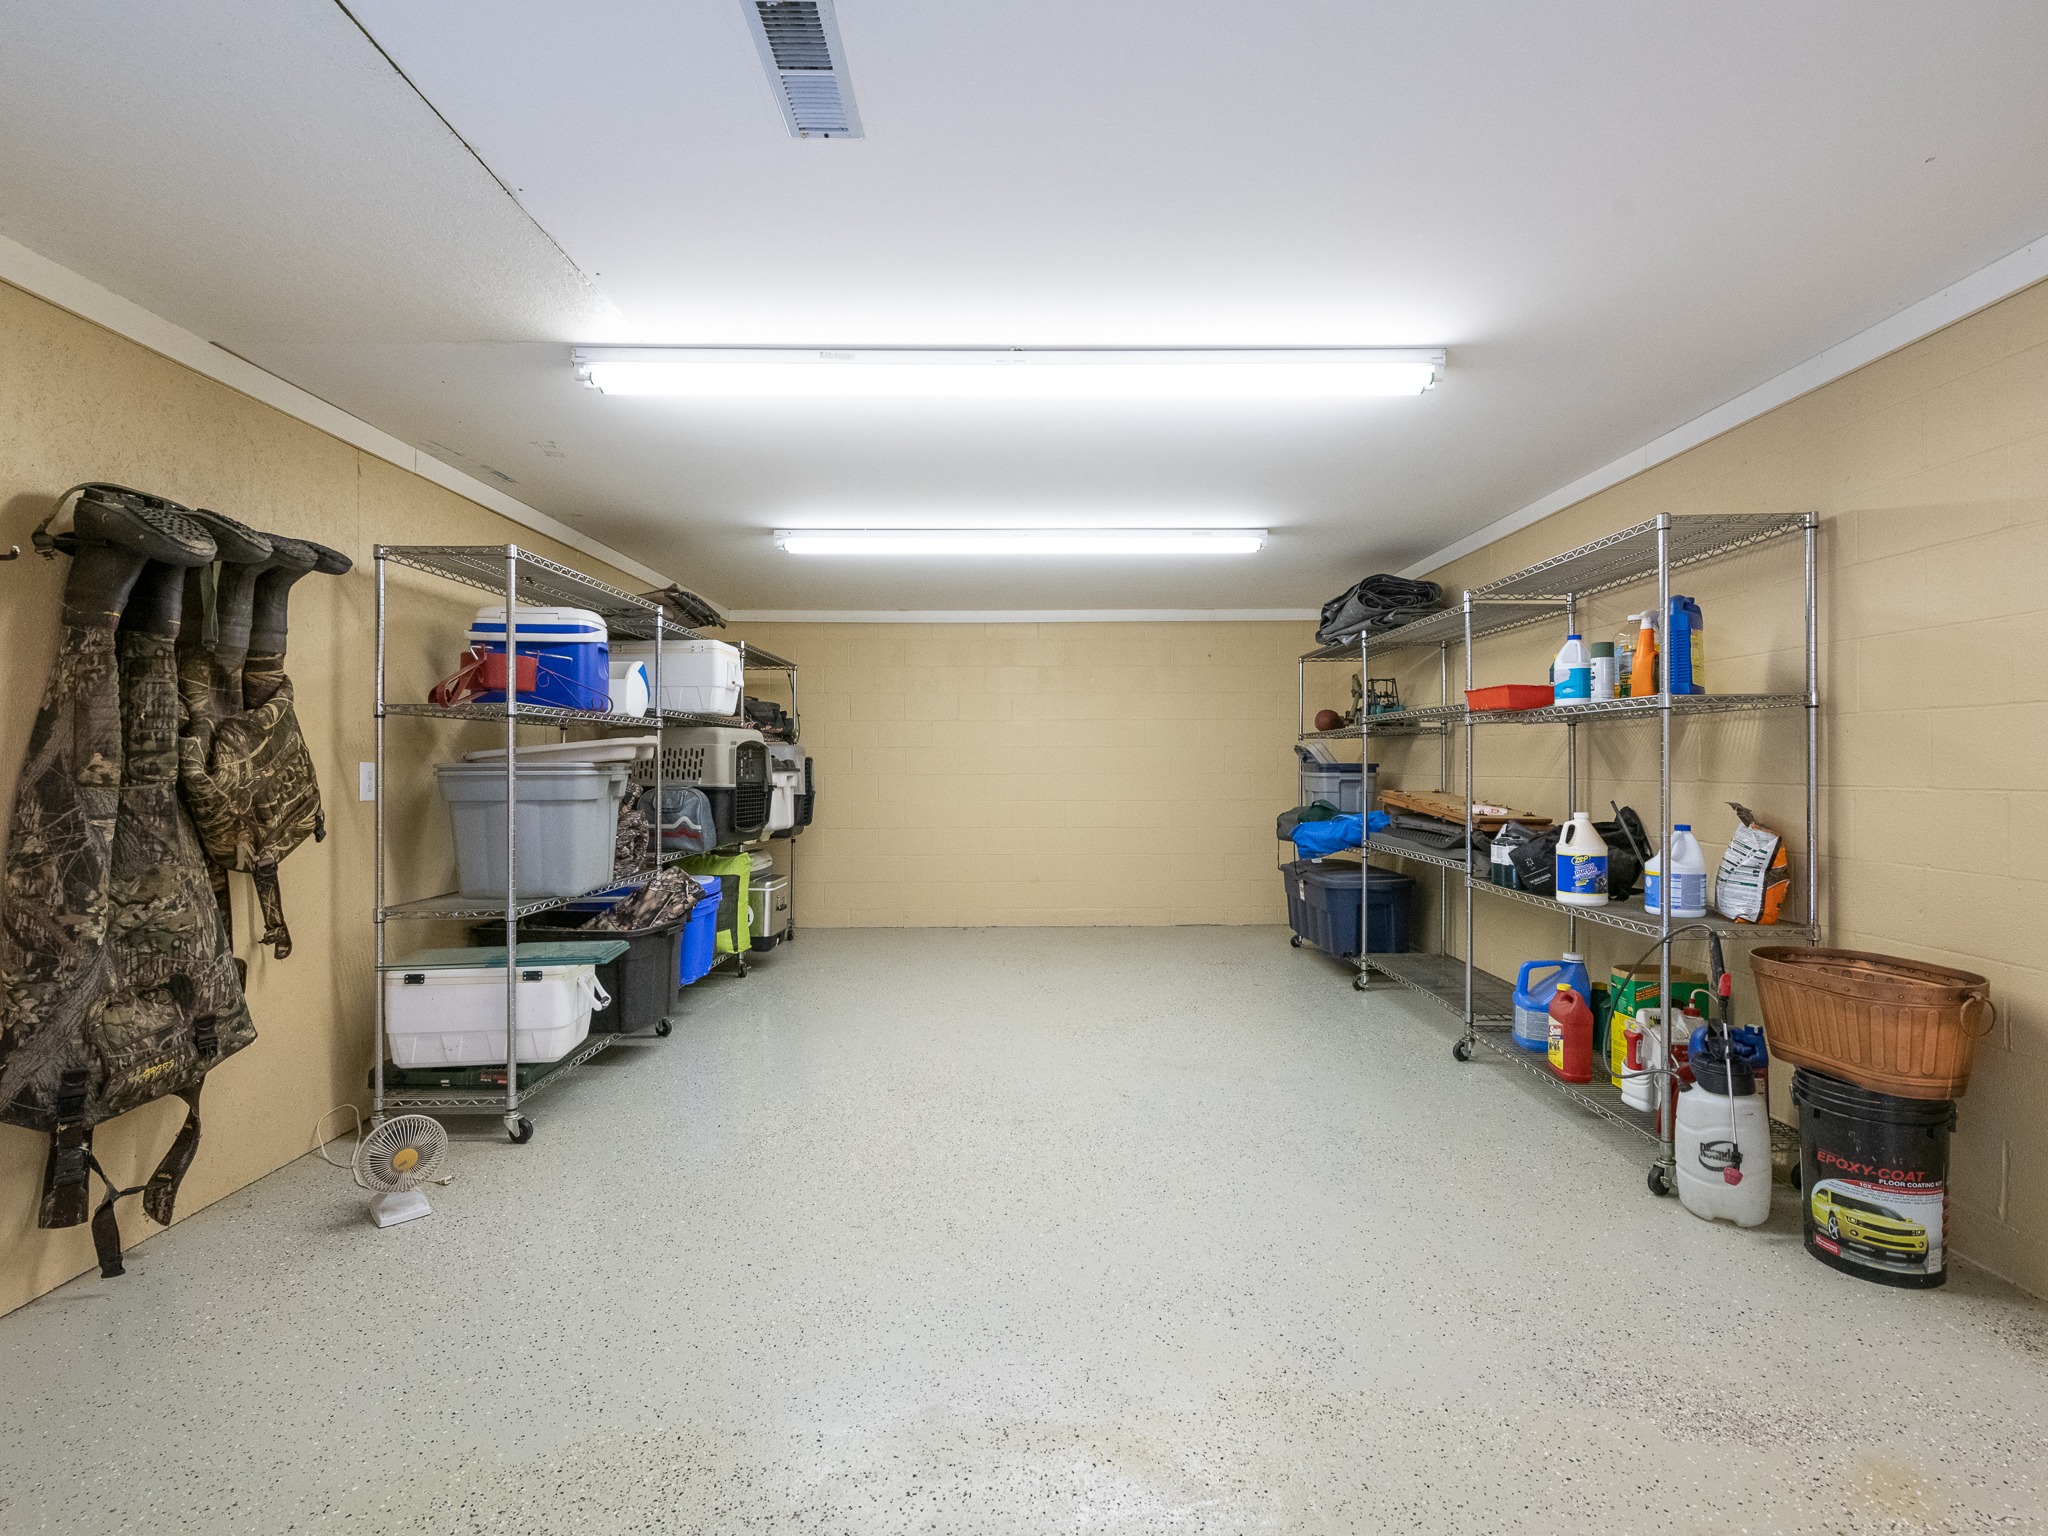 Epoxy floor, temperature controlled basement shop